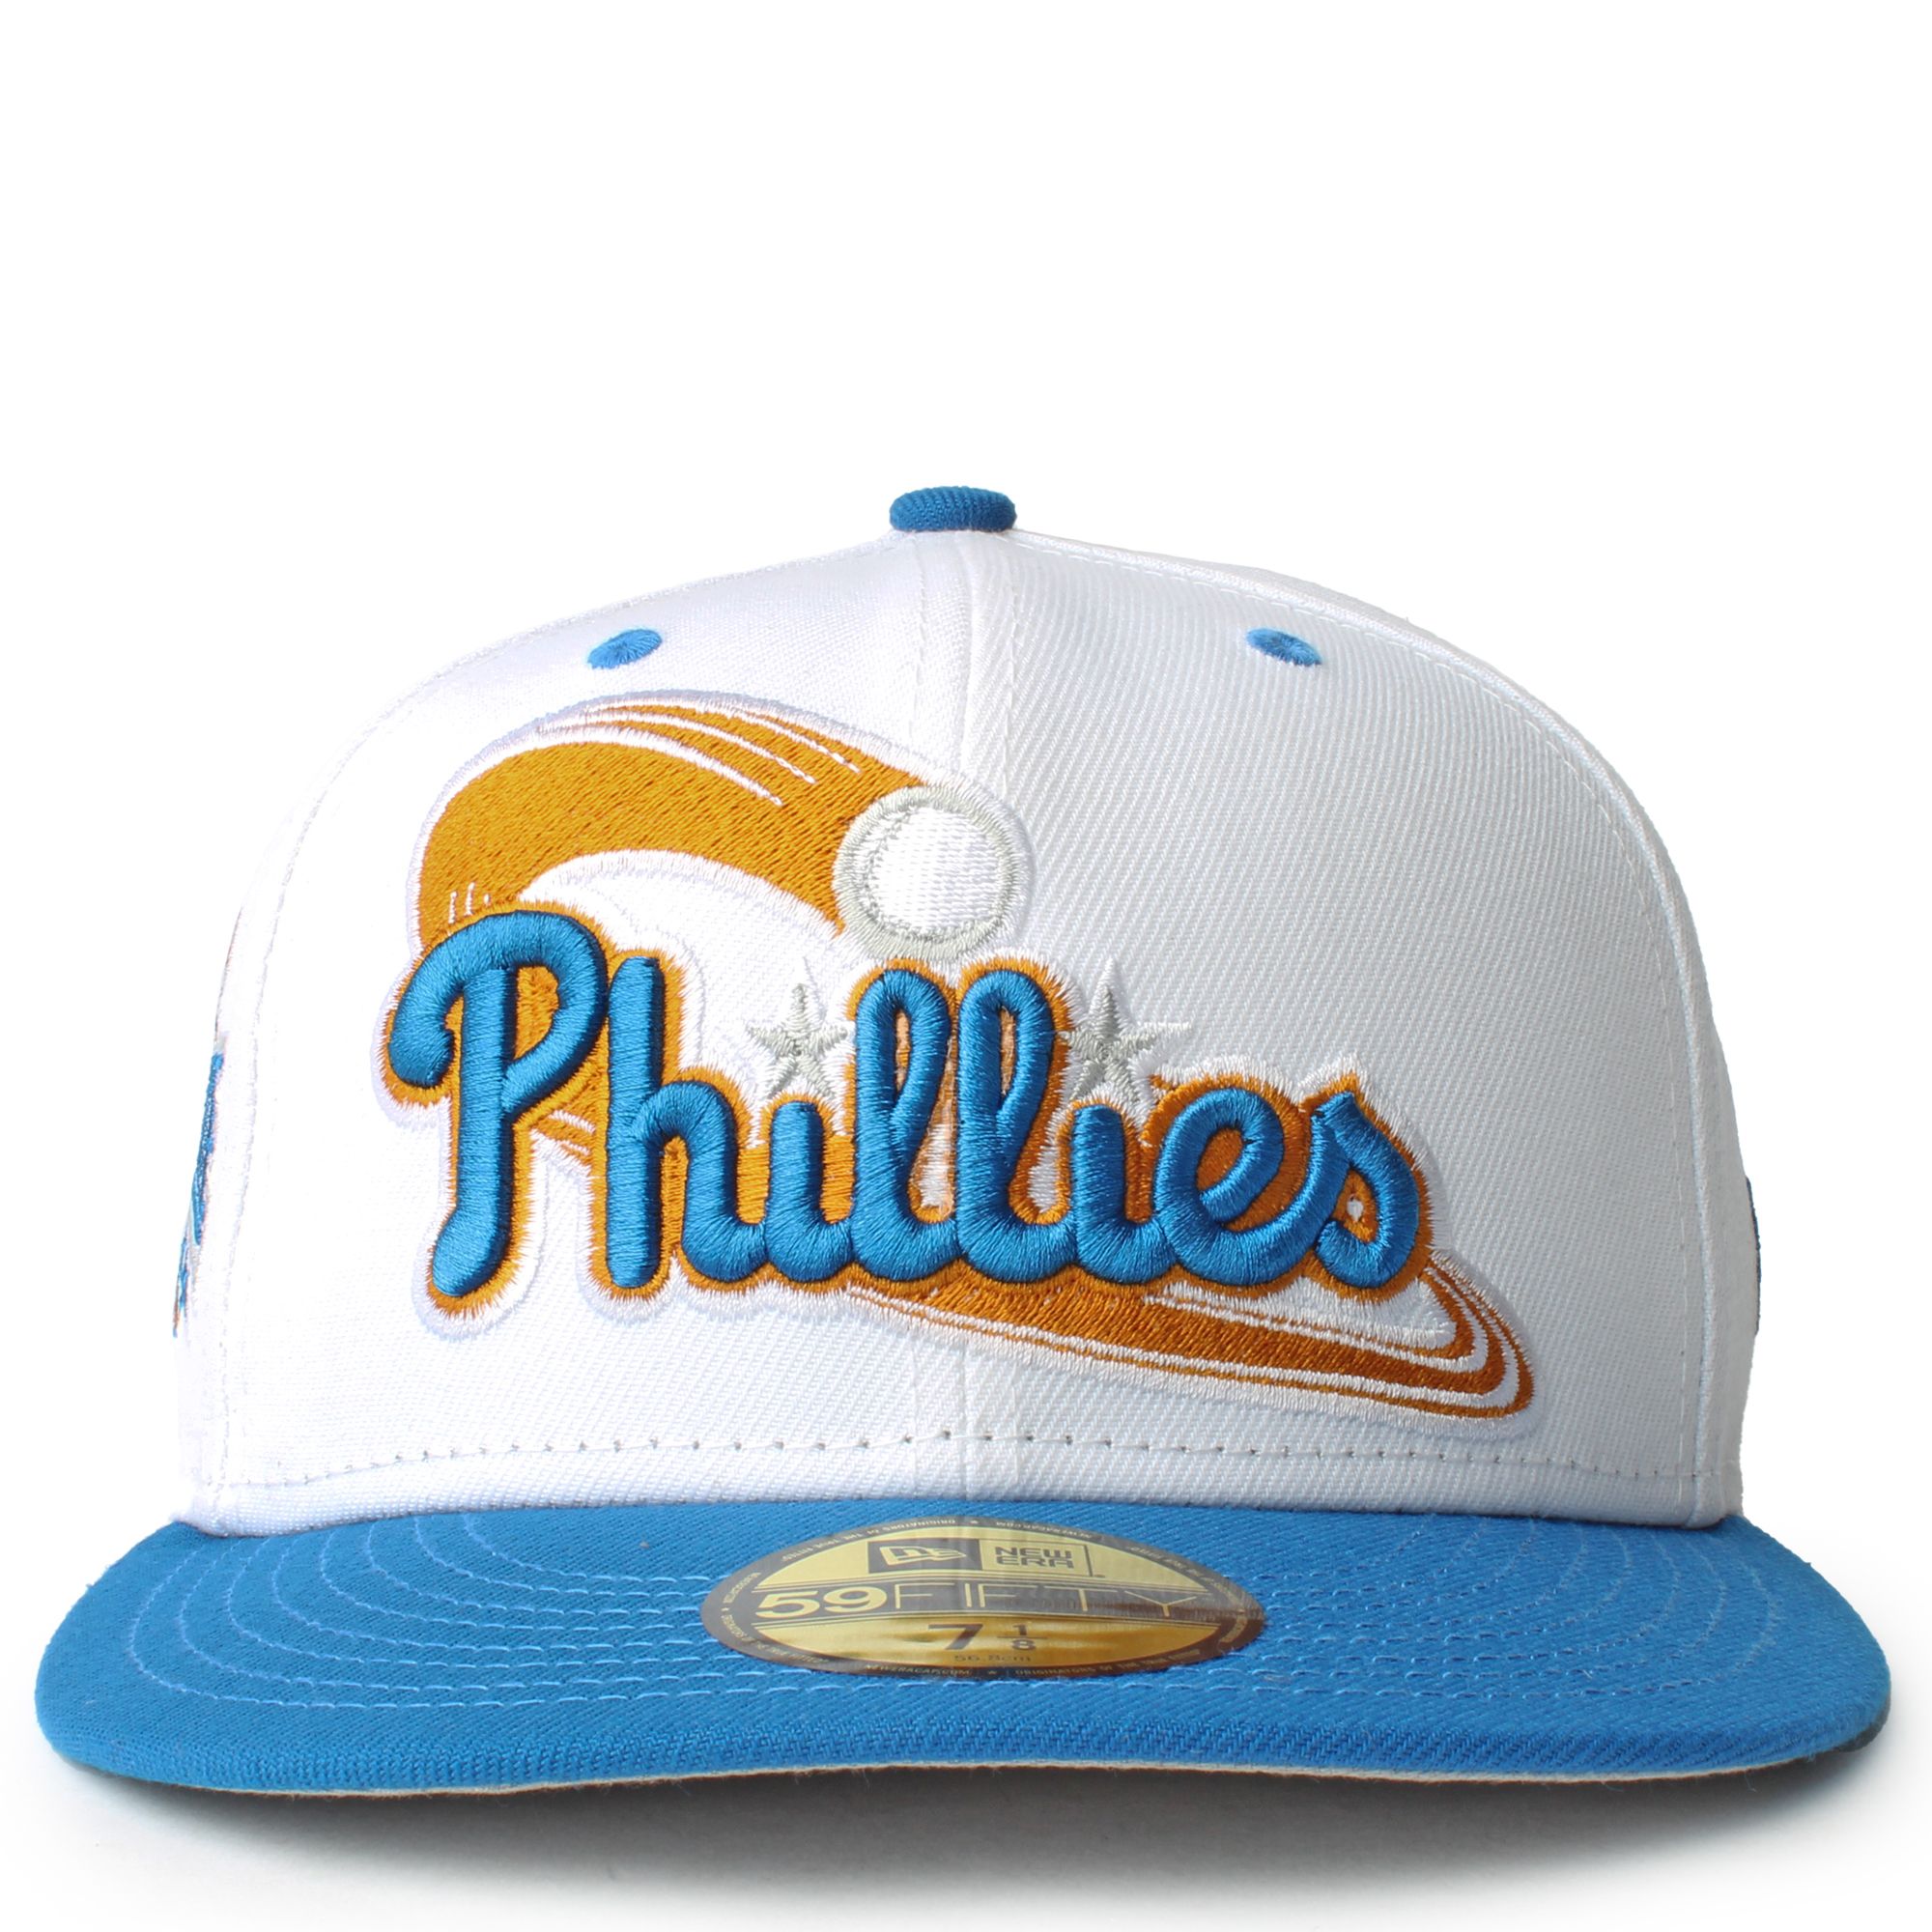 Men's Philadelphia Phillies New Era Light Blue 59FIFTY Fitted Hat